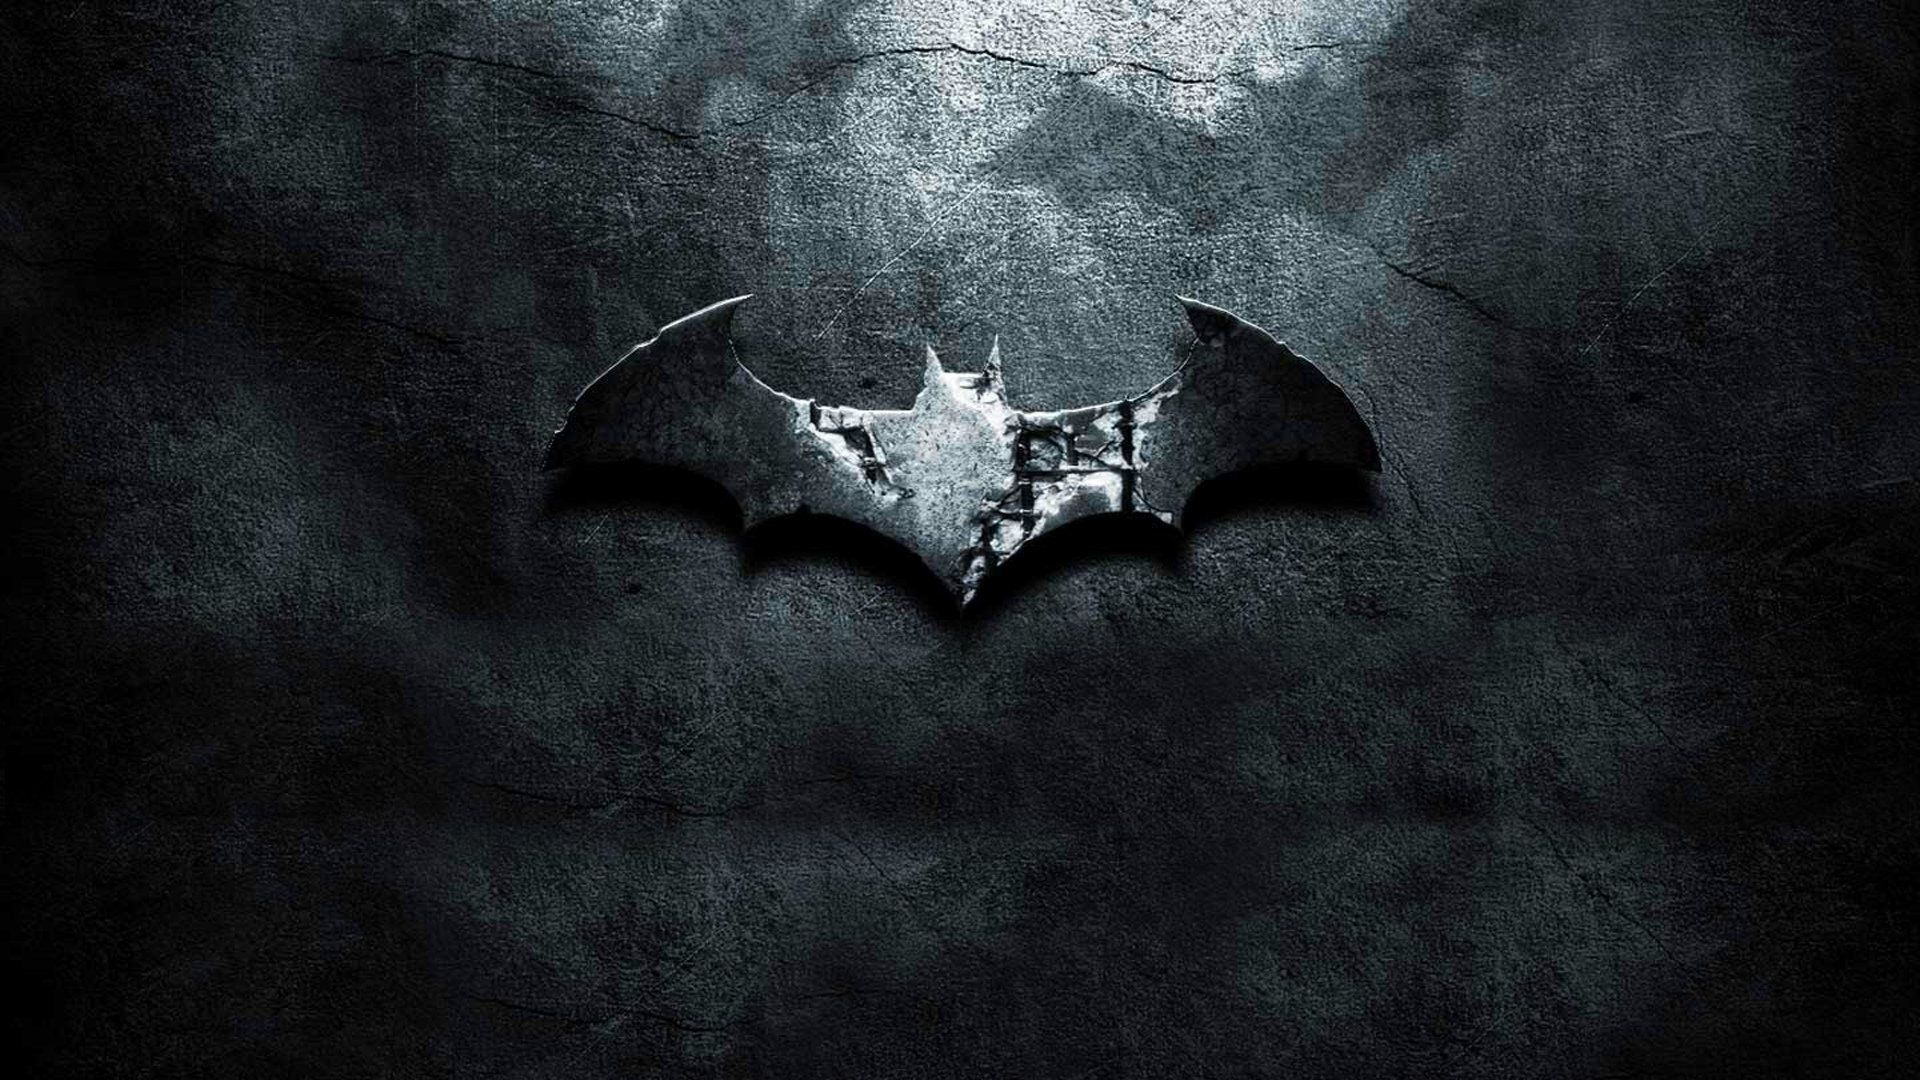 batman logo background